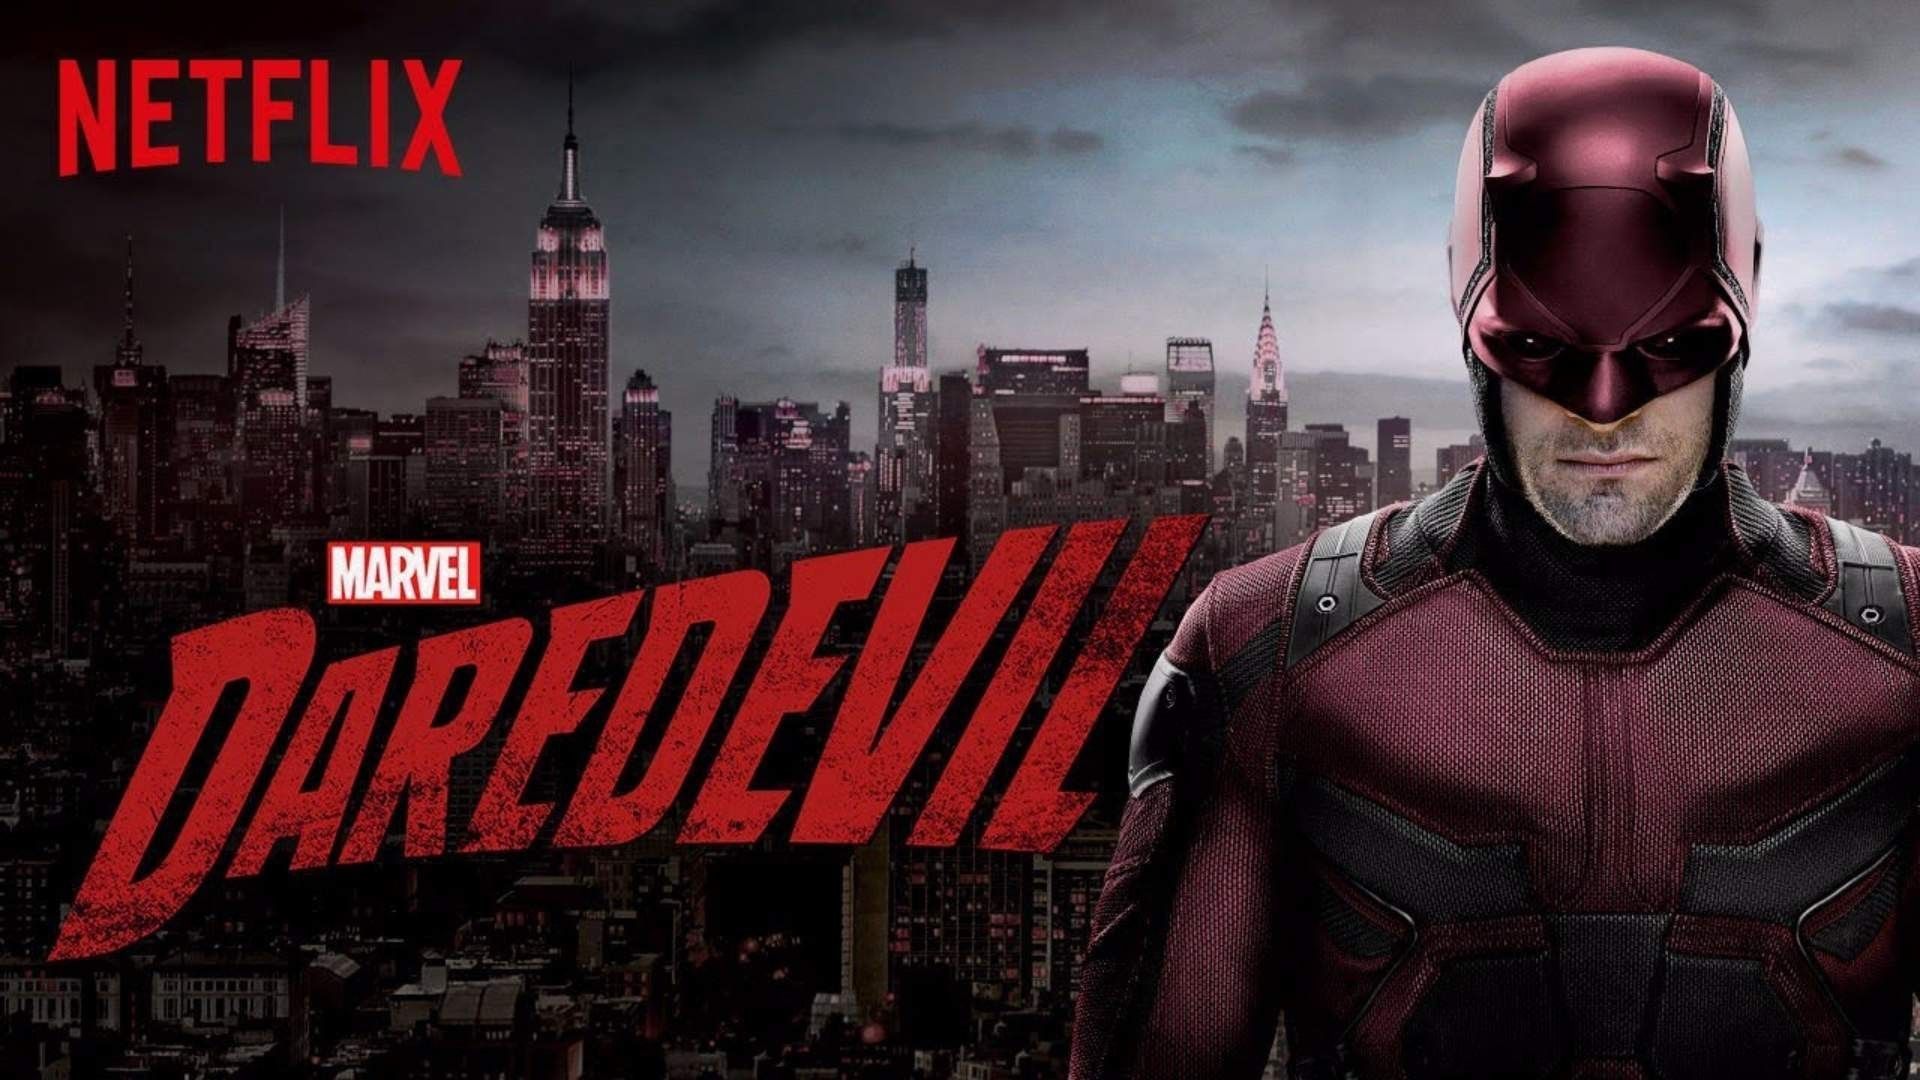 Netflix Daredevil HD Wallpaper Free Download Wallpaperxyz